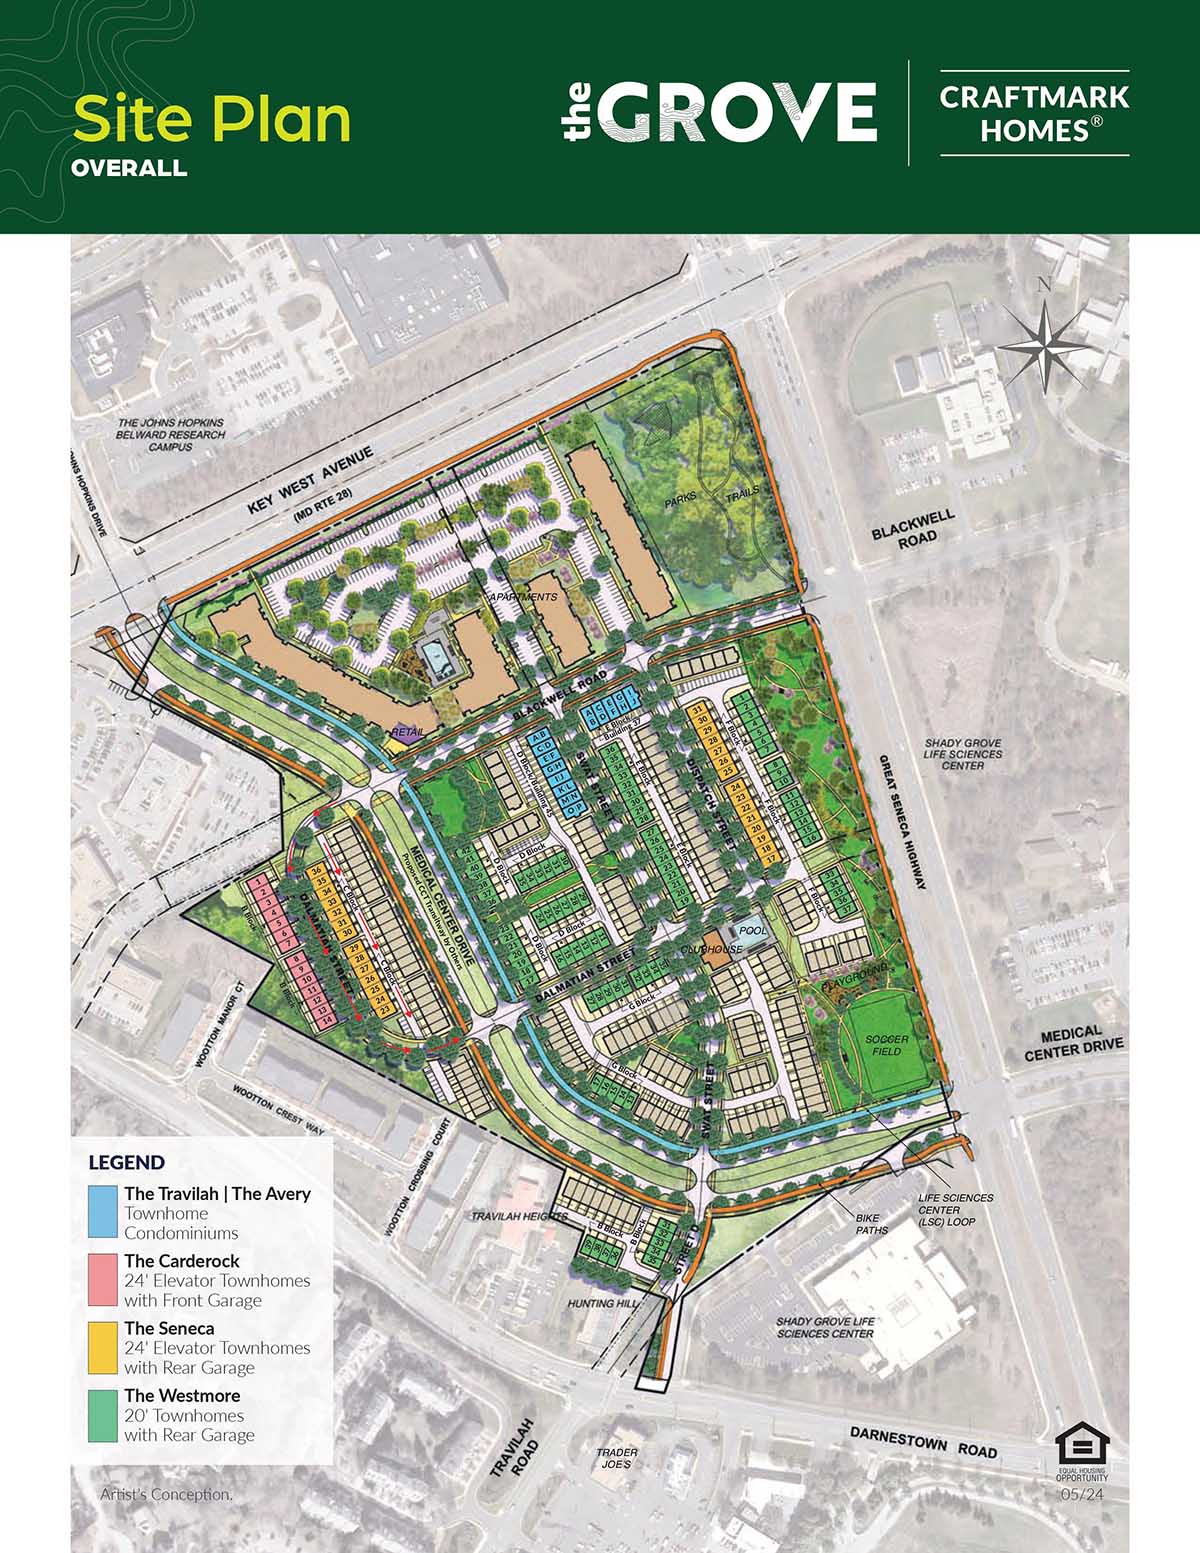 The Grove Site Plan, Craftmark Homes